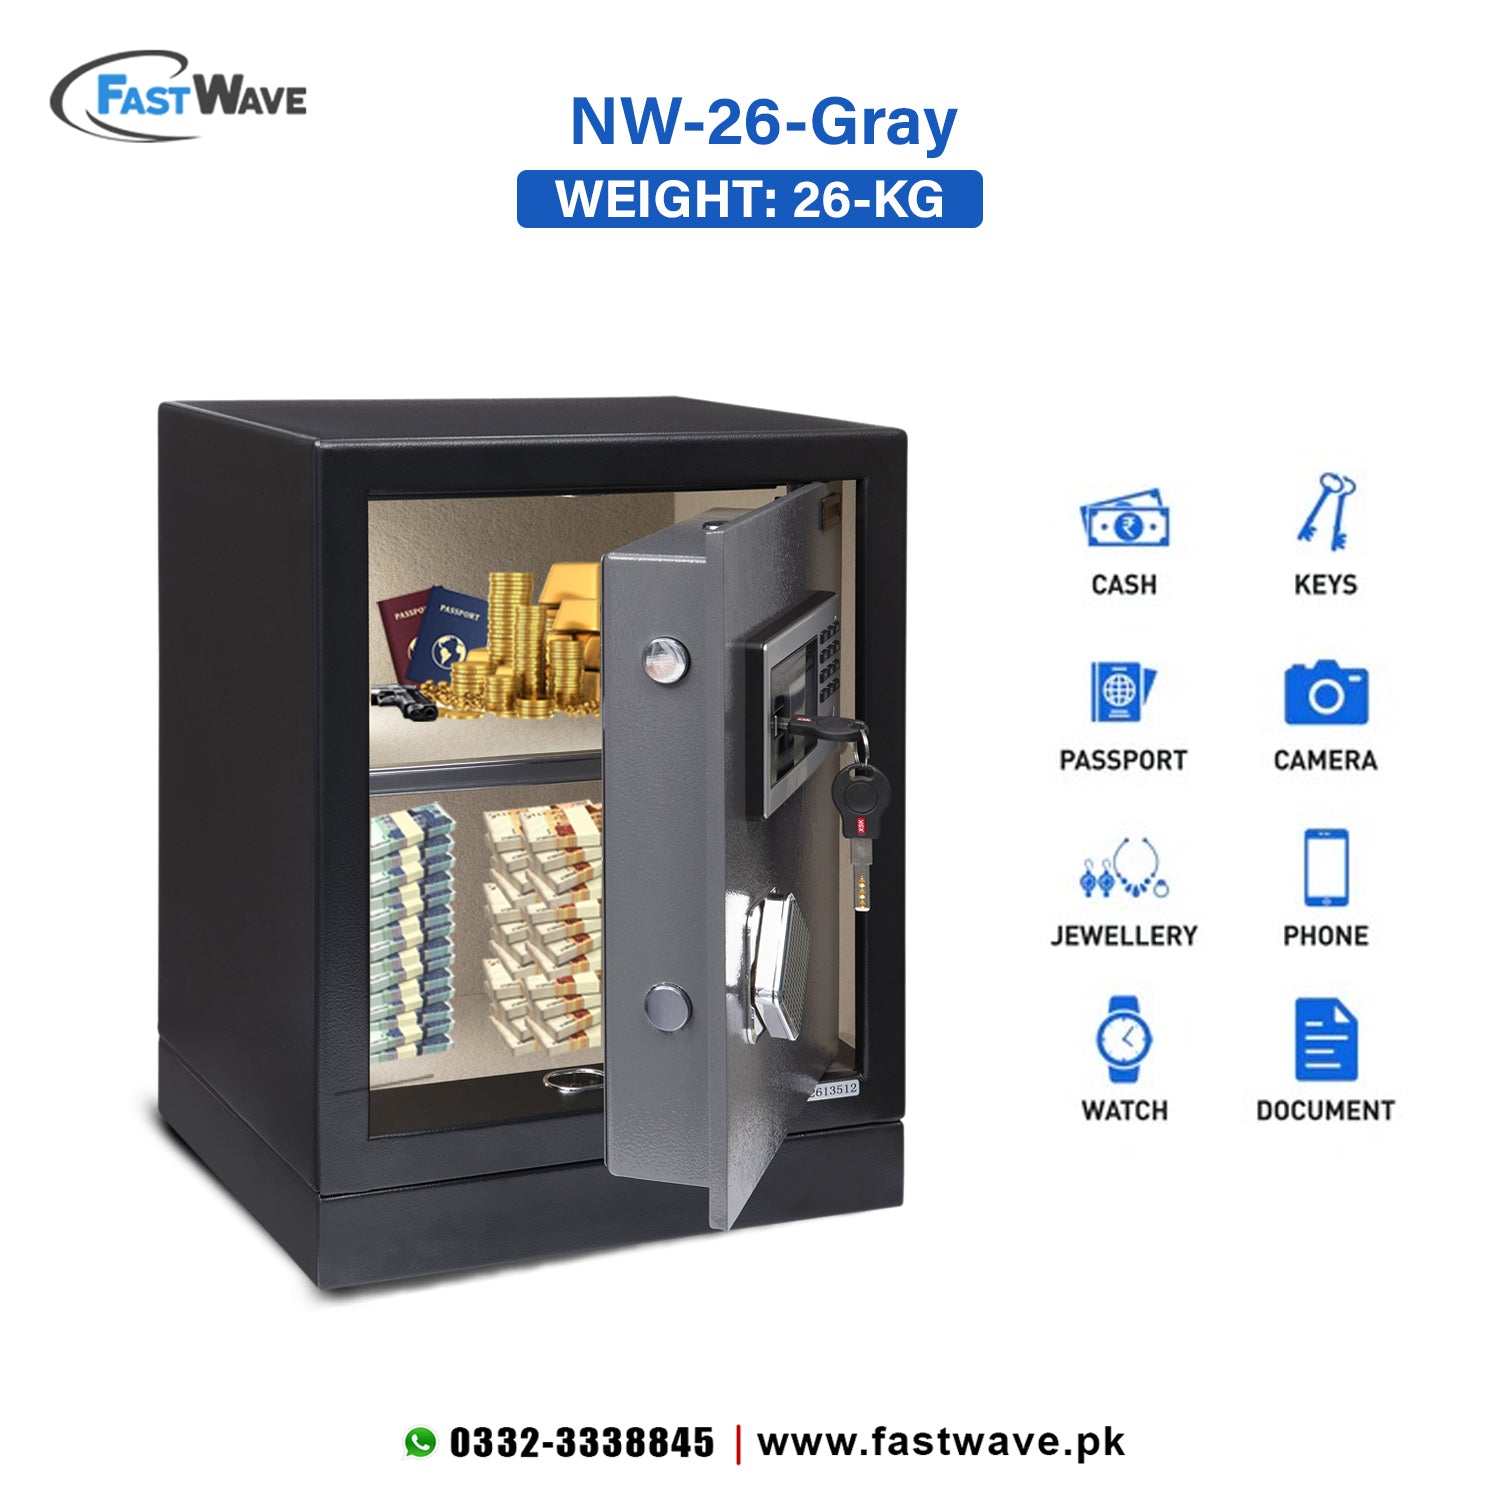 Digital Security Locker NW-KG-26 GRAY